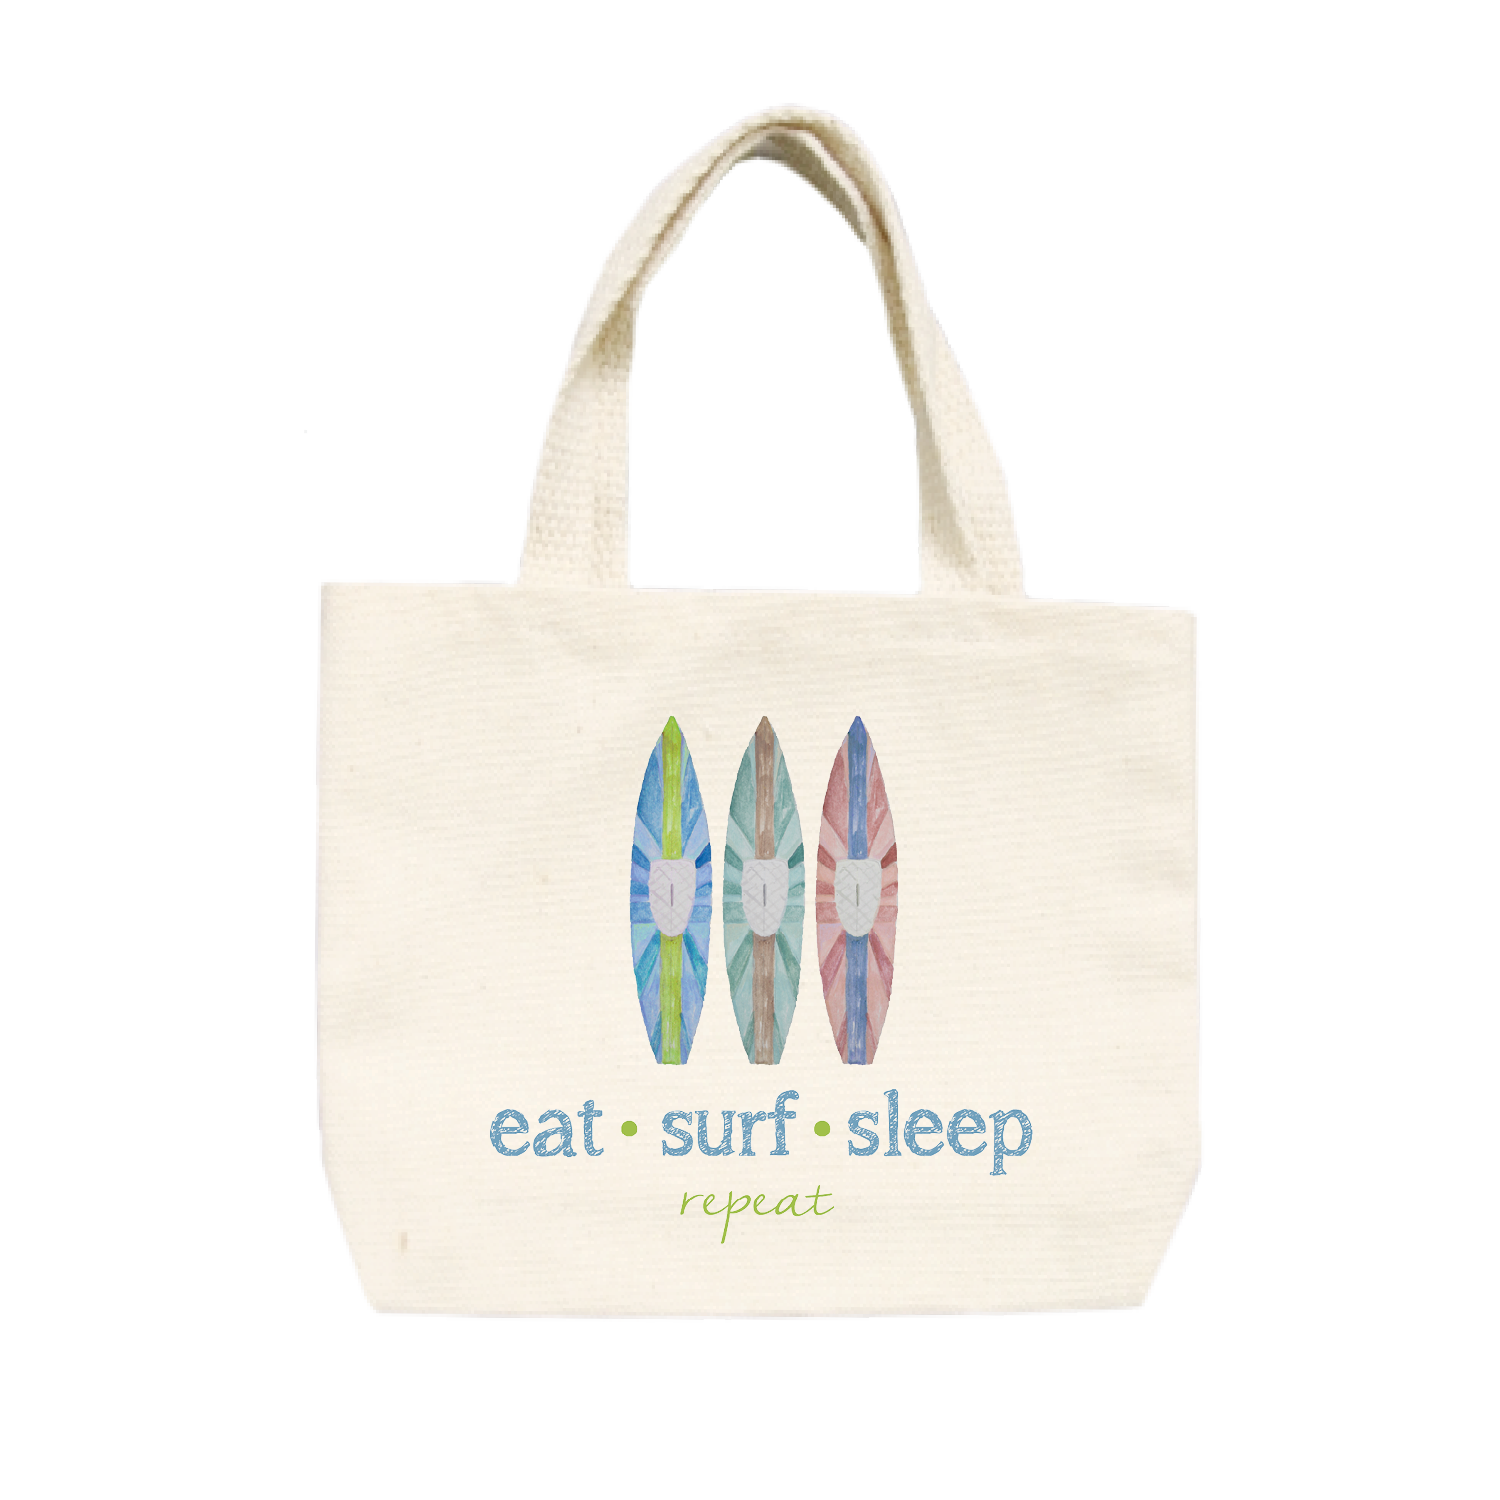 eat surf sleep repeat small tote